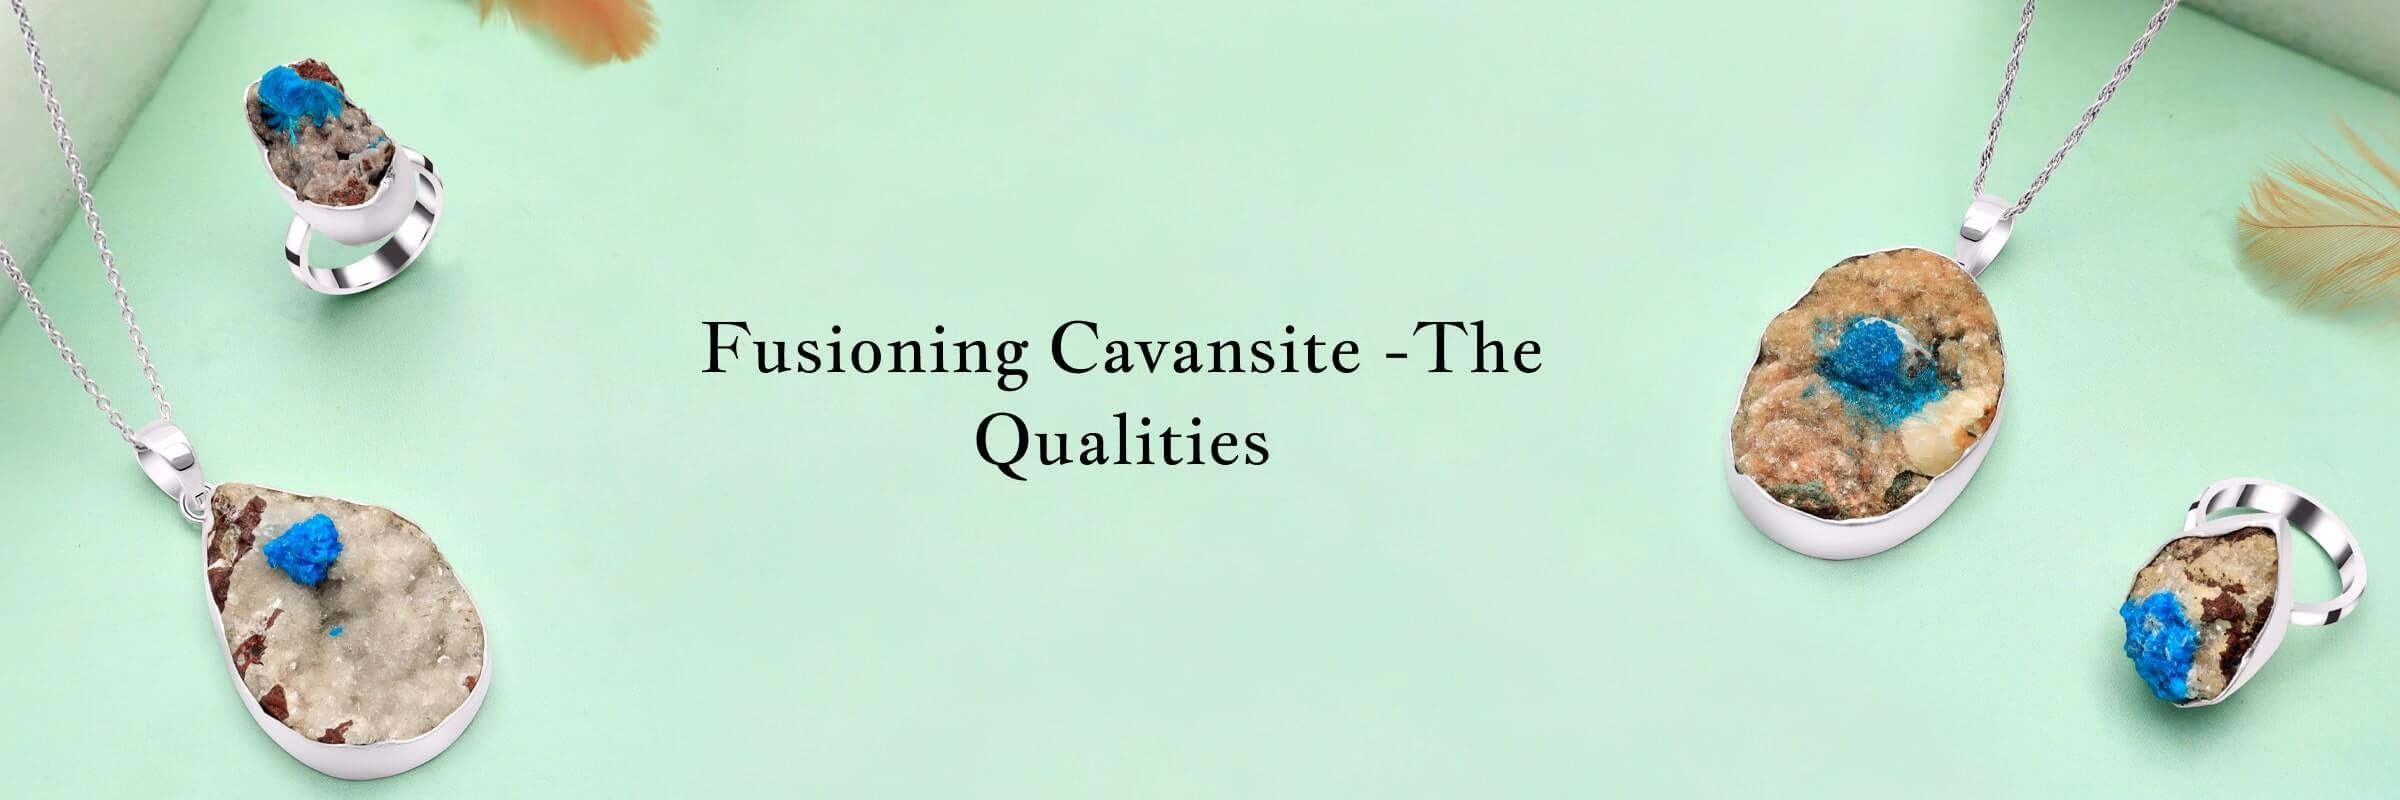 Cavansite Metaphysical & Healing properties